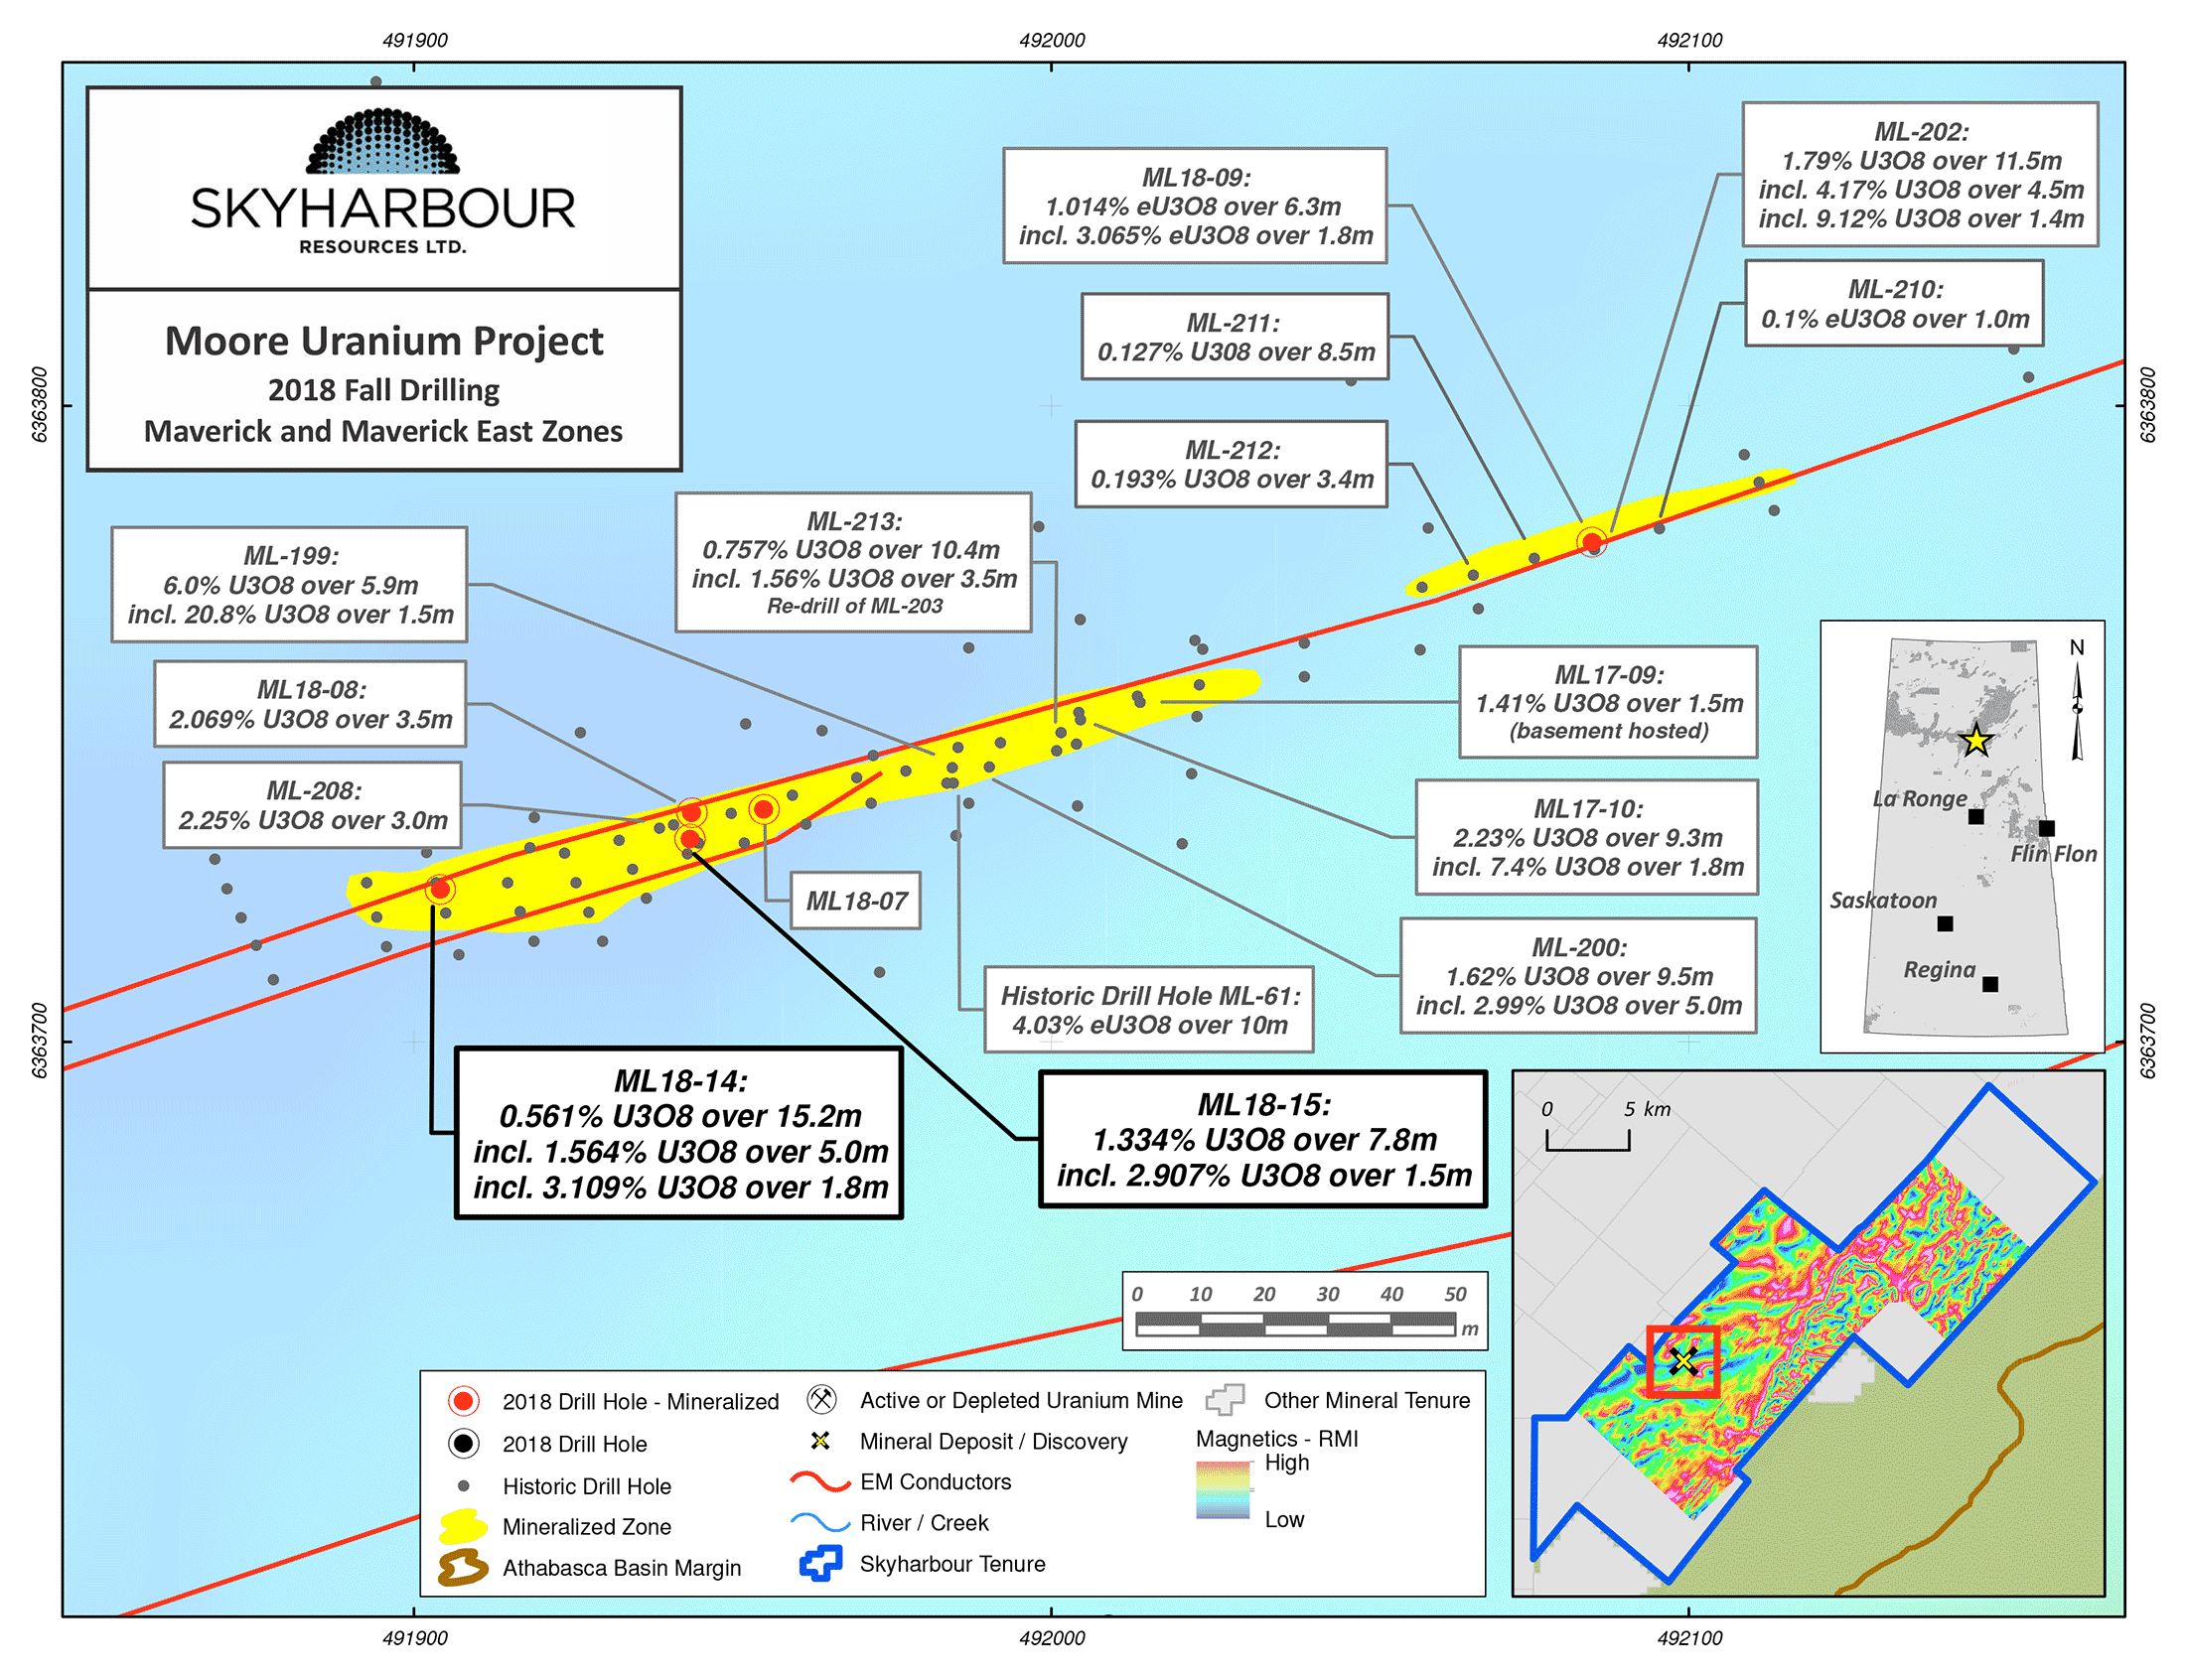 Moore Uranium Project Main and East Maverick Zones Drilling Map